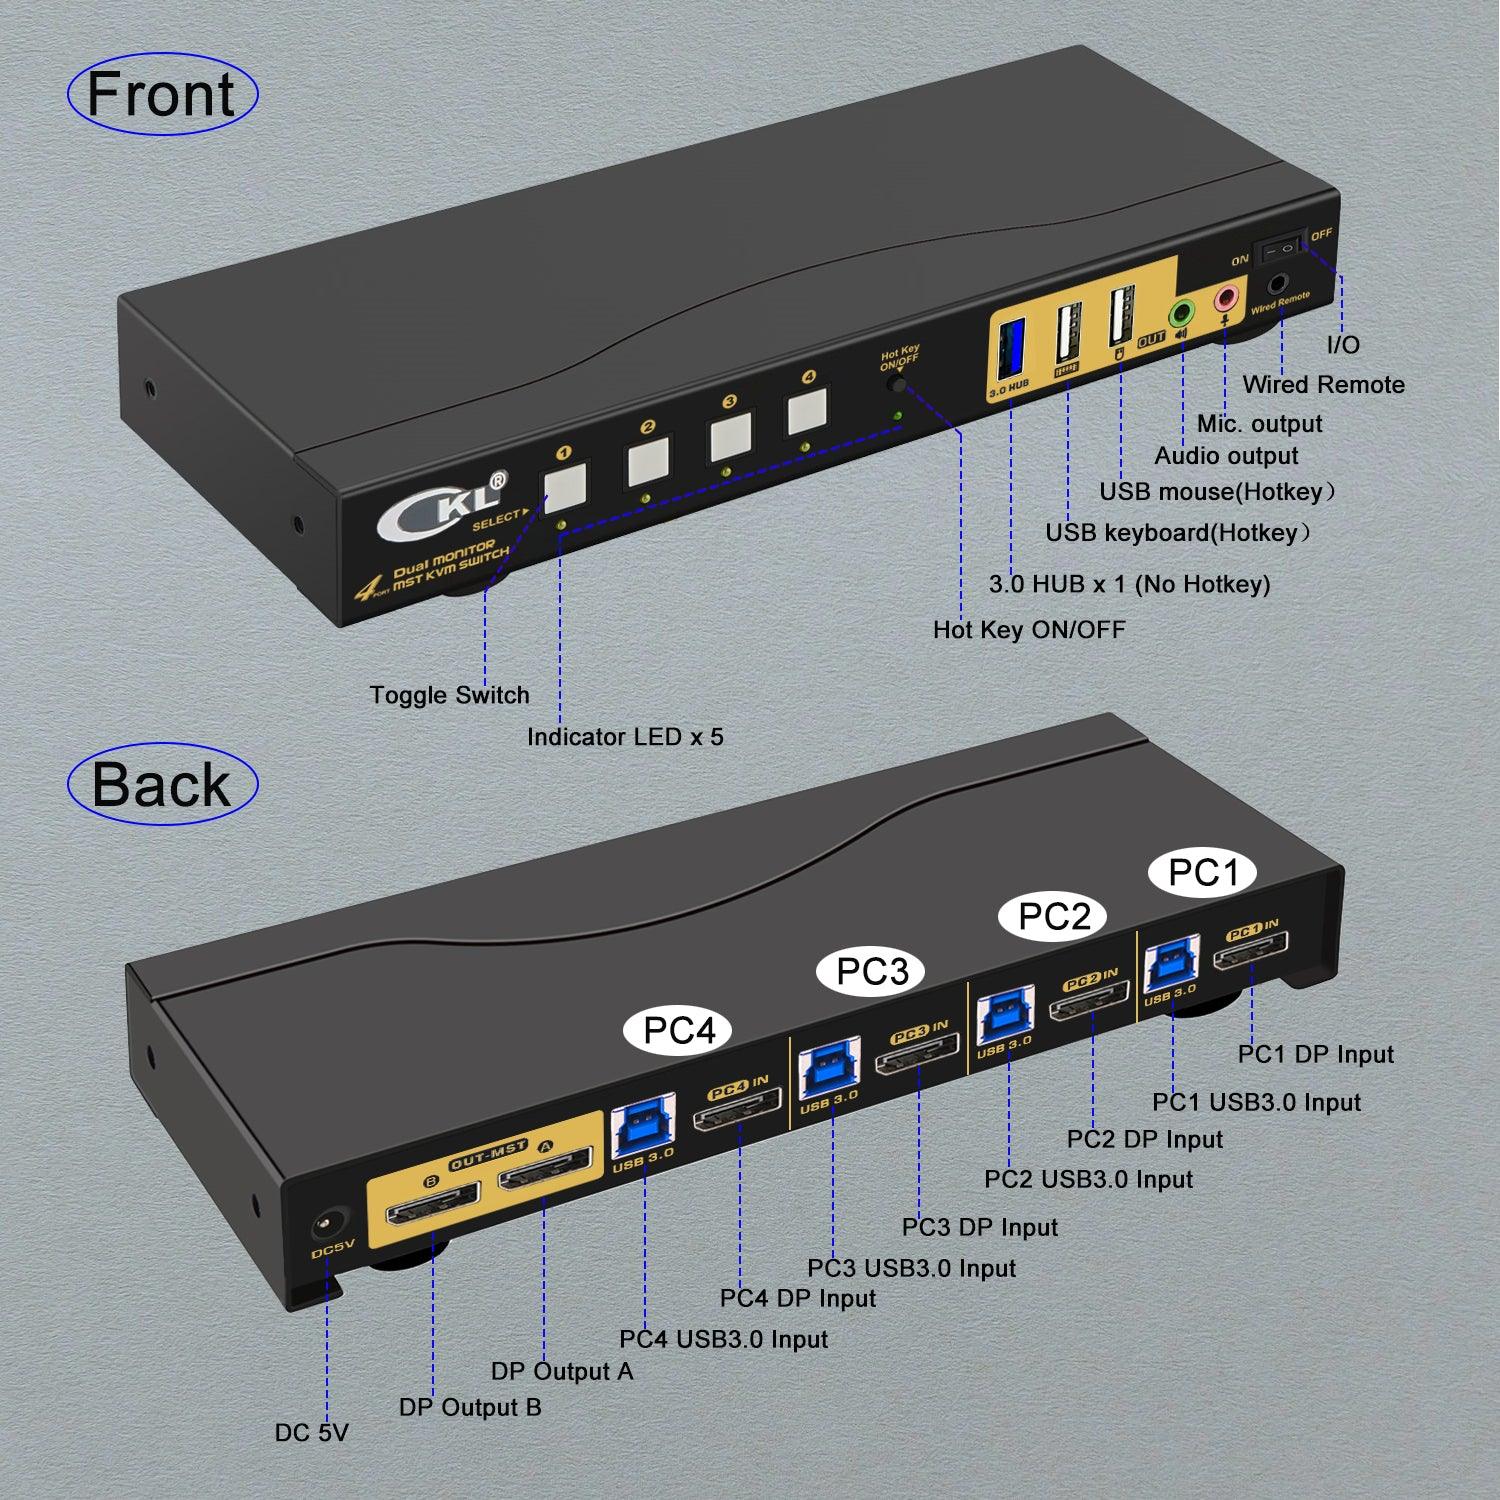 CKL DisplayPort 1.4 MST KVM Switch Dual Monitor 4 Port 4K 60Hz | DisplayPort + DisplayPort Output | 4 Computers 2 Monitors | Support USB 3.0, Audio, Mic (642DP-MST) - CKL KVM Switches